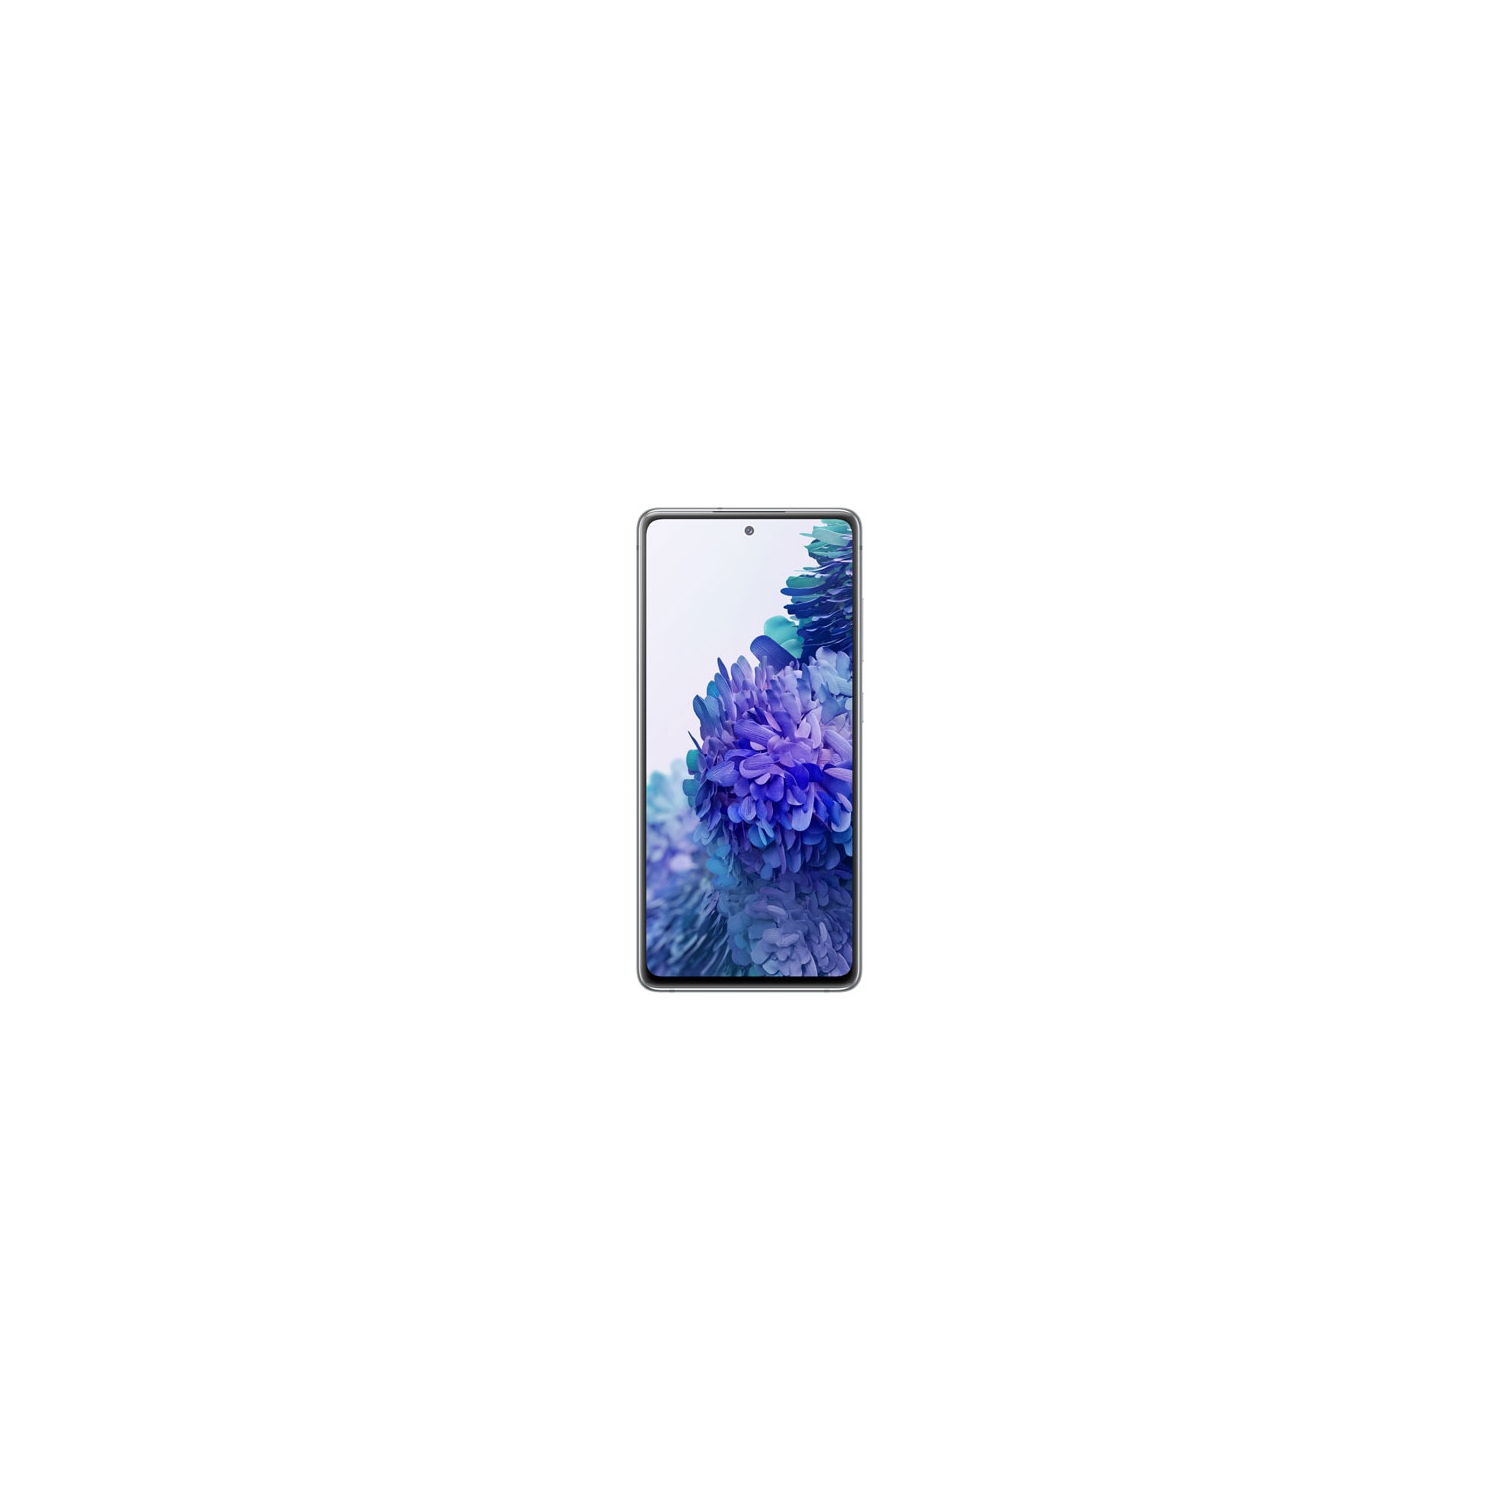 Samsung Galaxy S20 FE 128GB Smartphone - Cloud White - Unlocked - Open Box